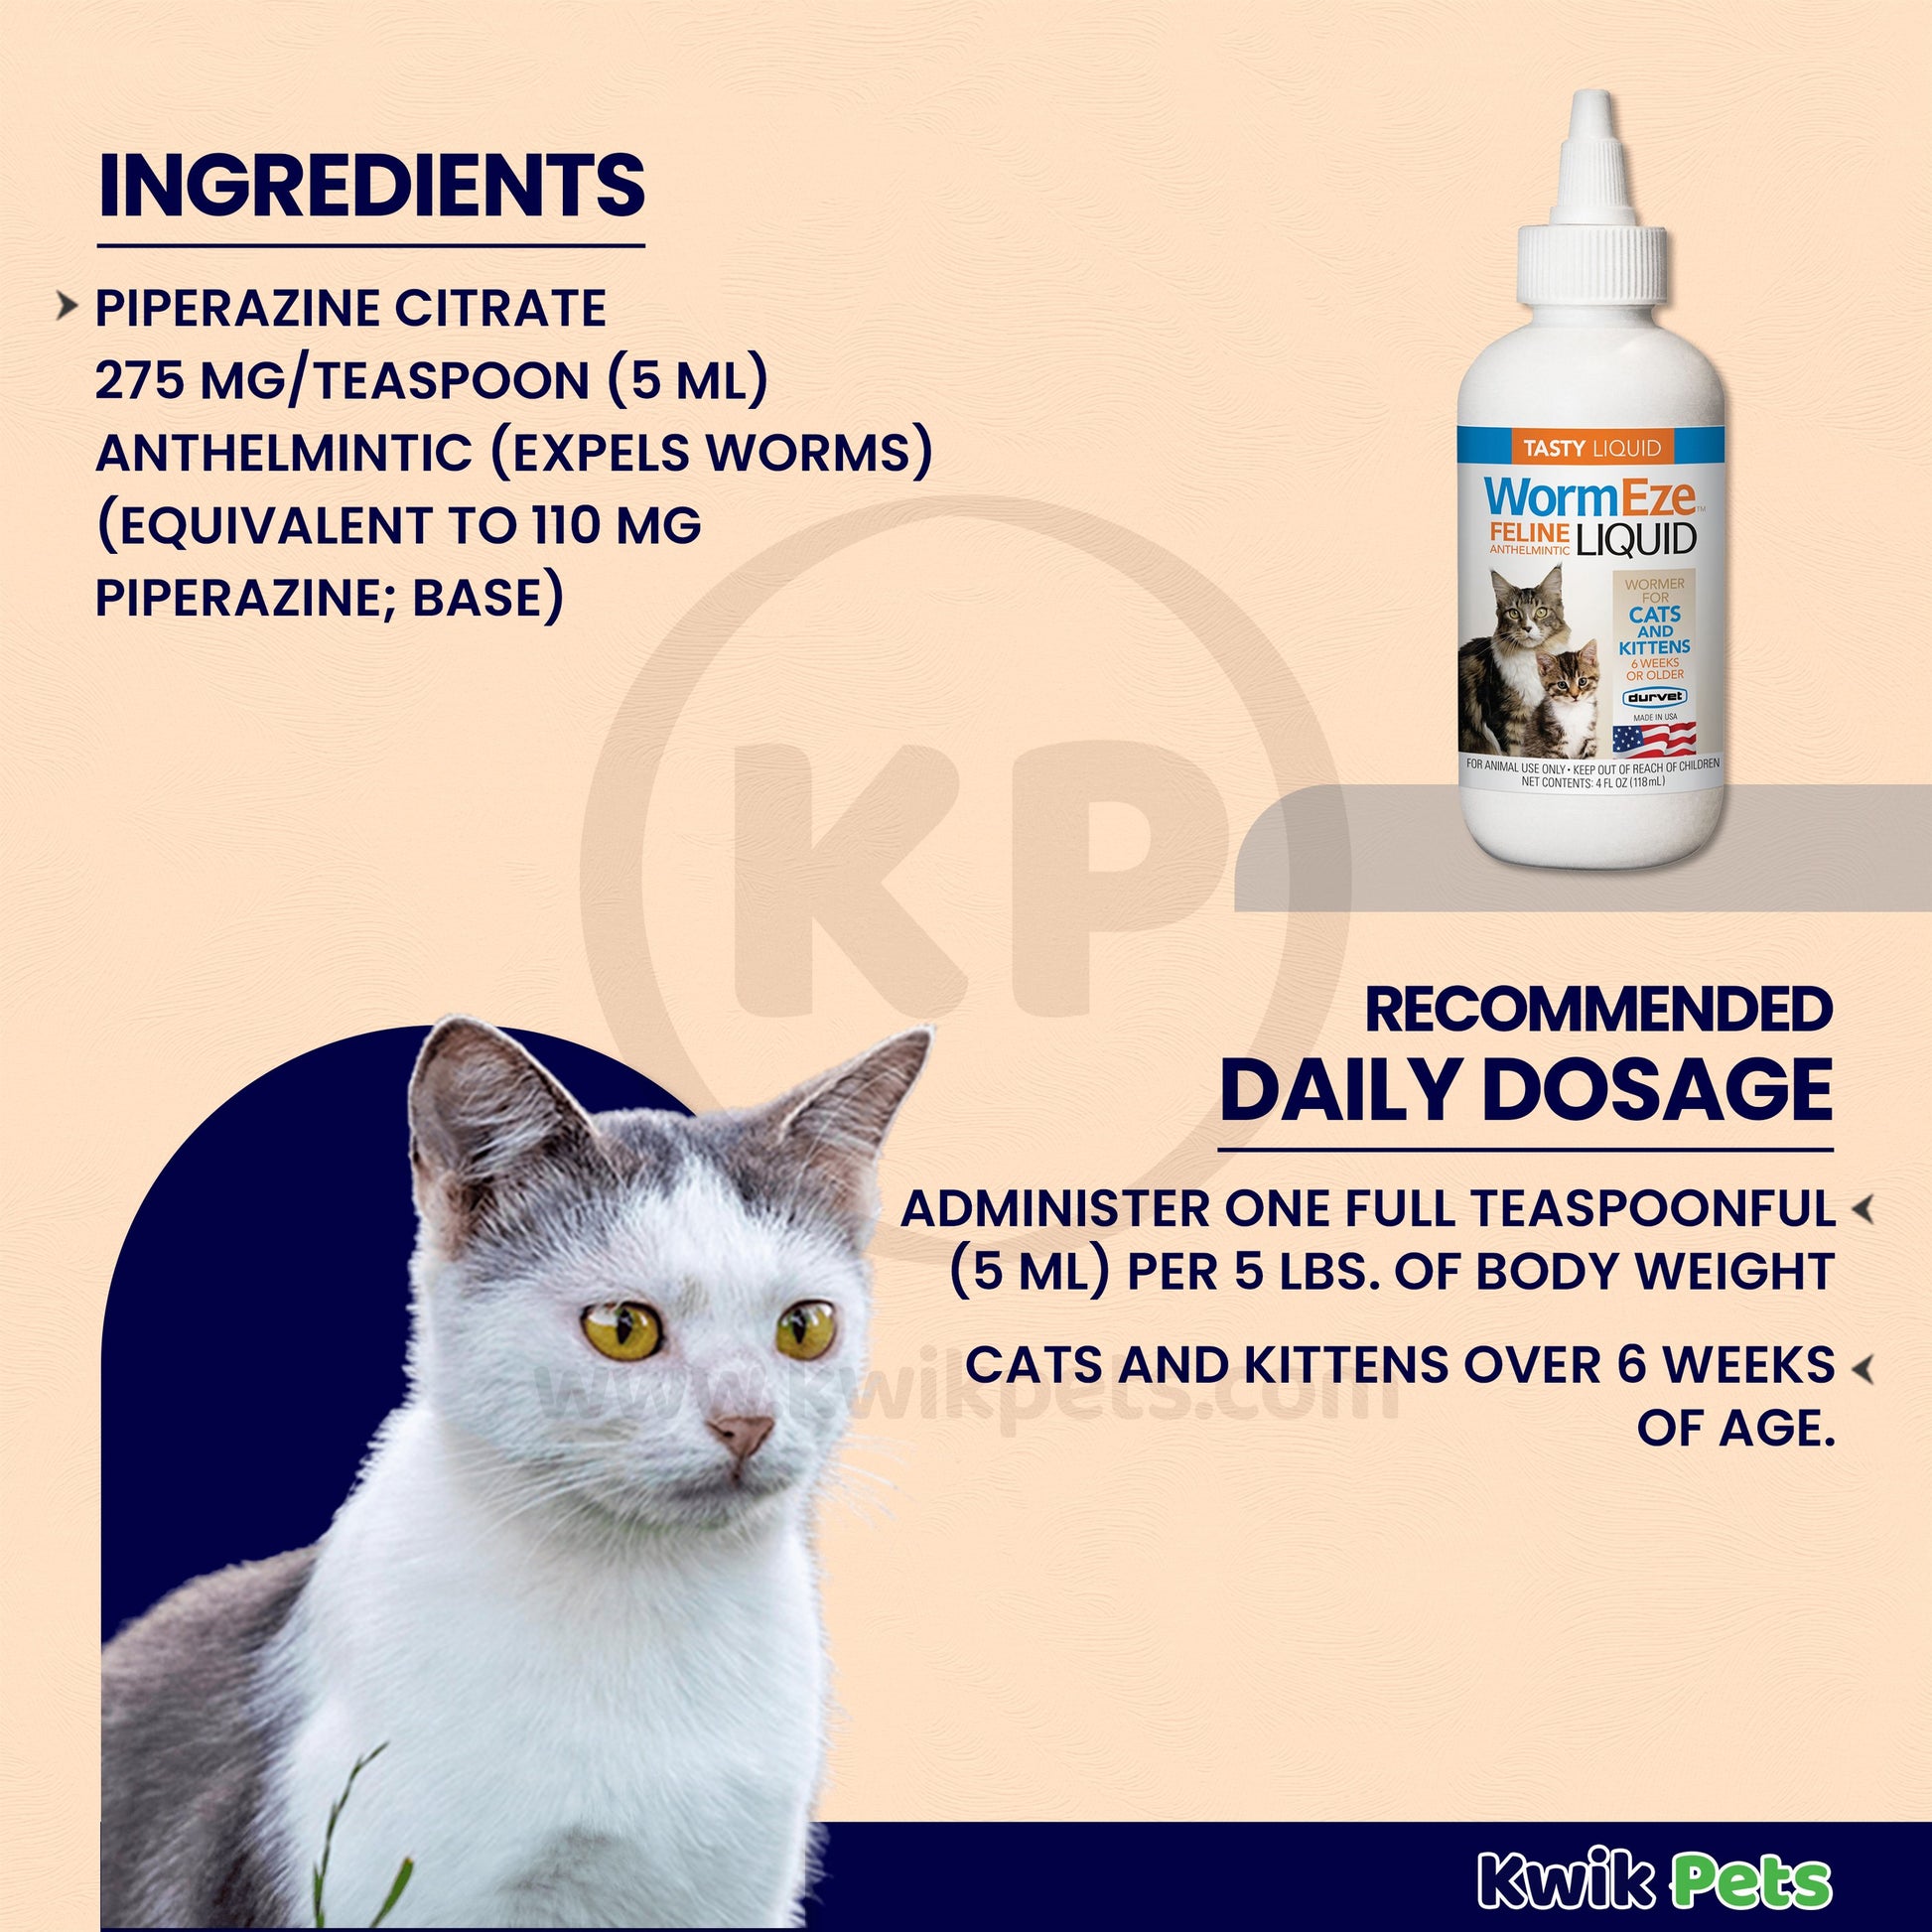 Durvet WormEze Cat and Kitten Dewormer - Liquid 4 fl oz, Durvet